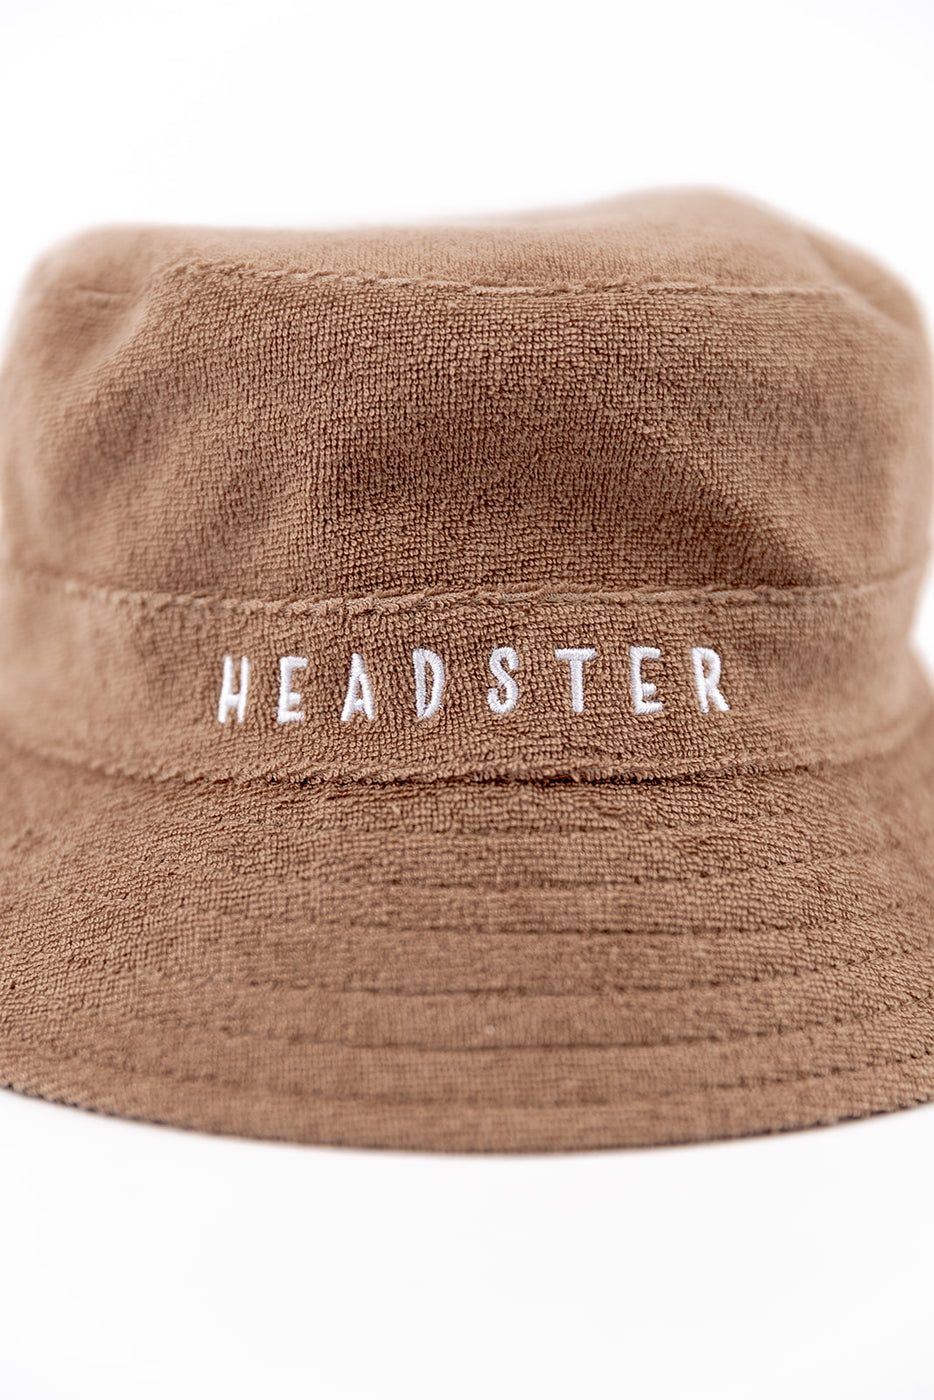 Headster Summer Hats